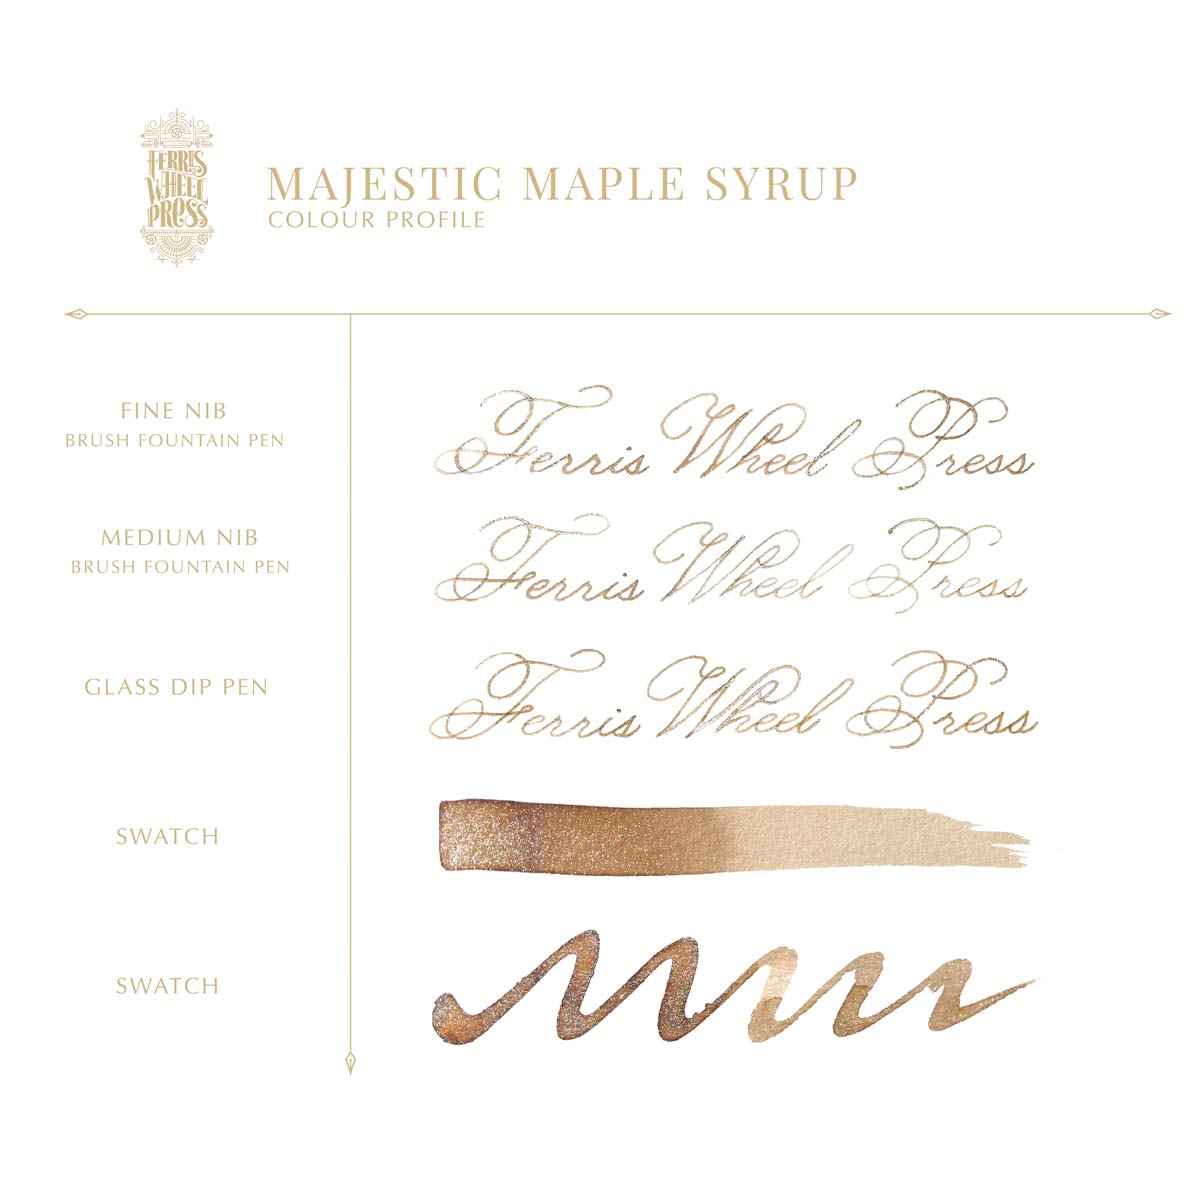 Ferris Wheel Press - Majestic Maple Syrup, 38 ml